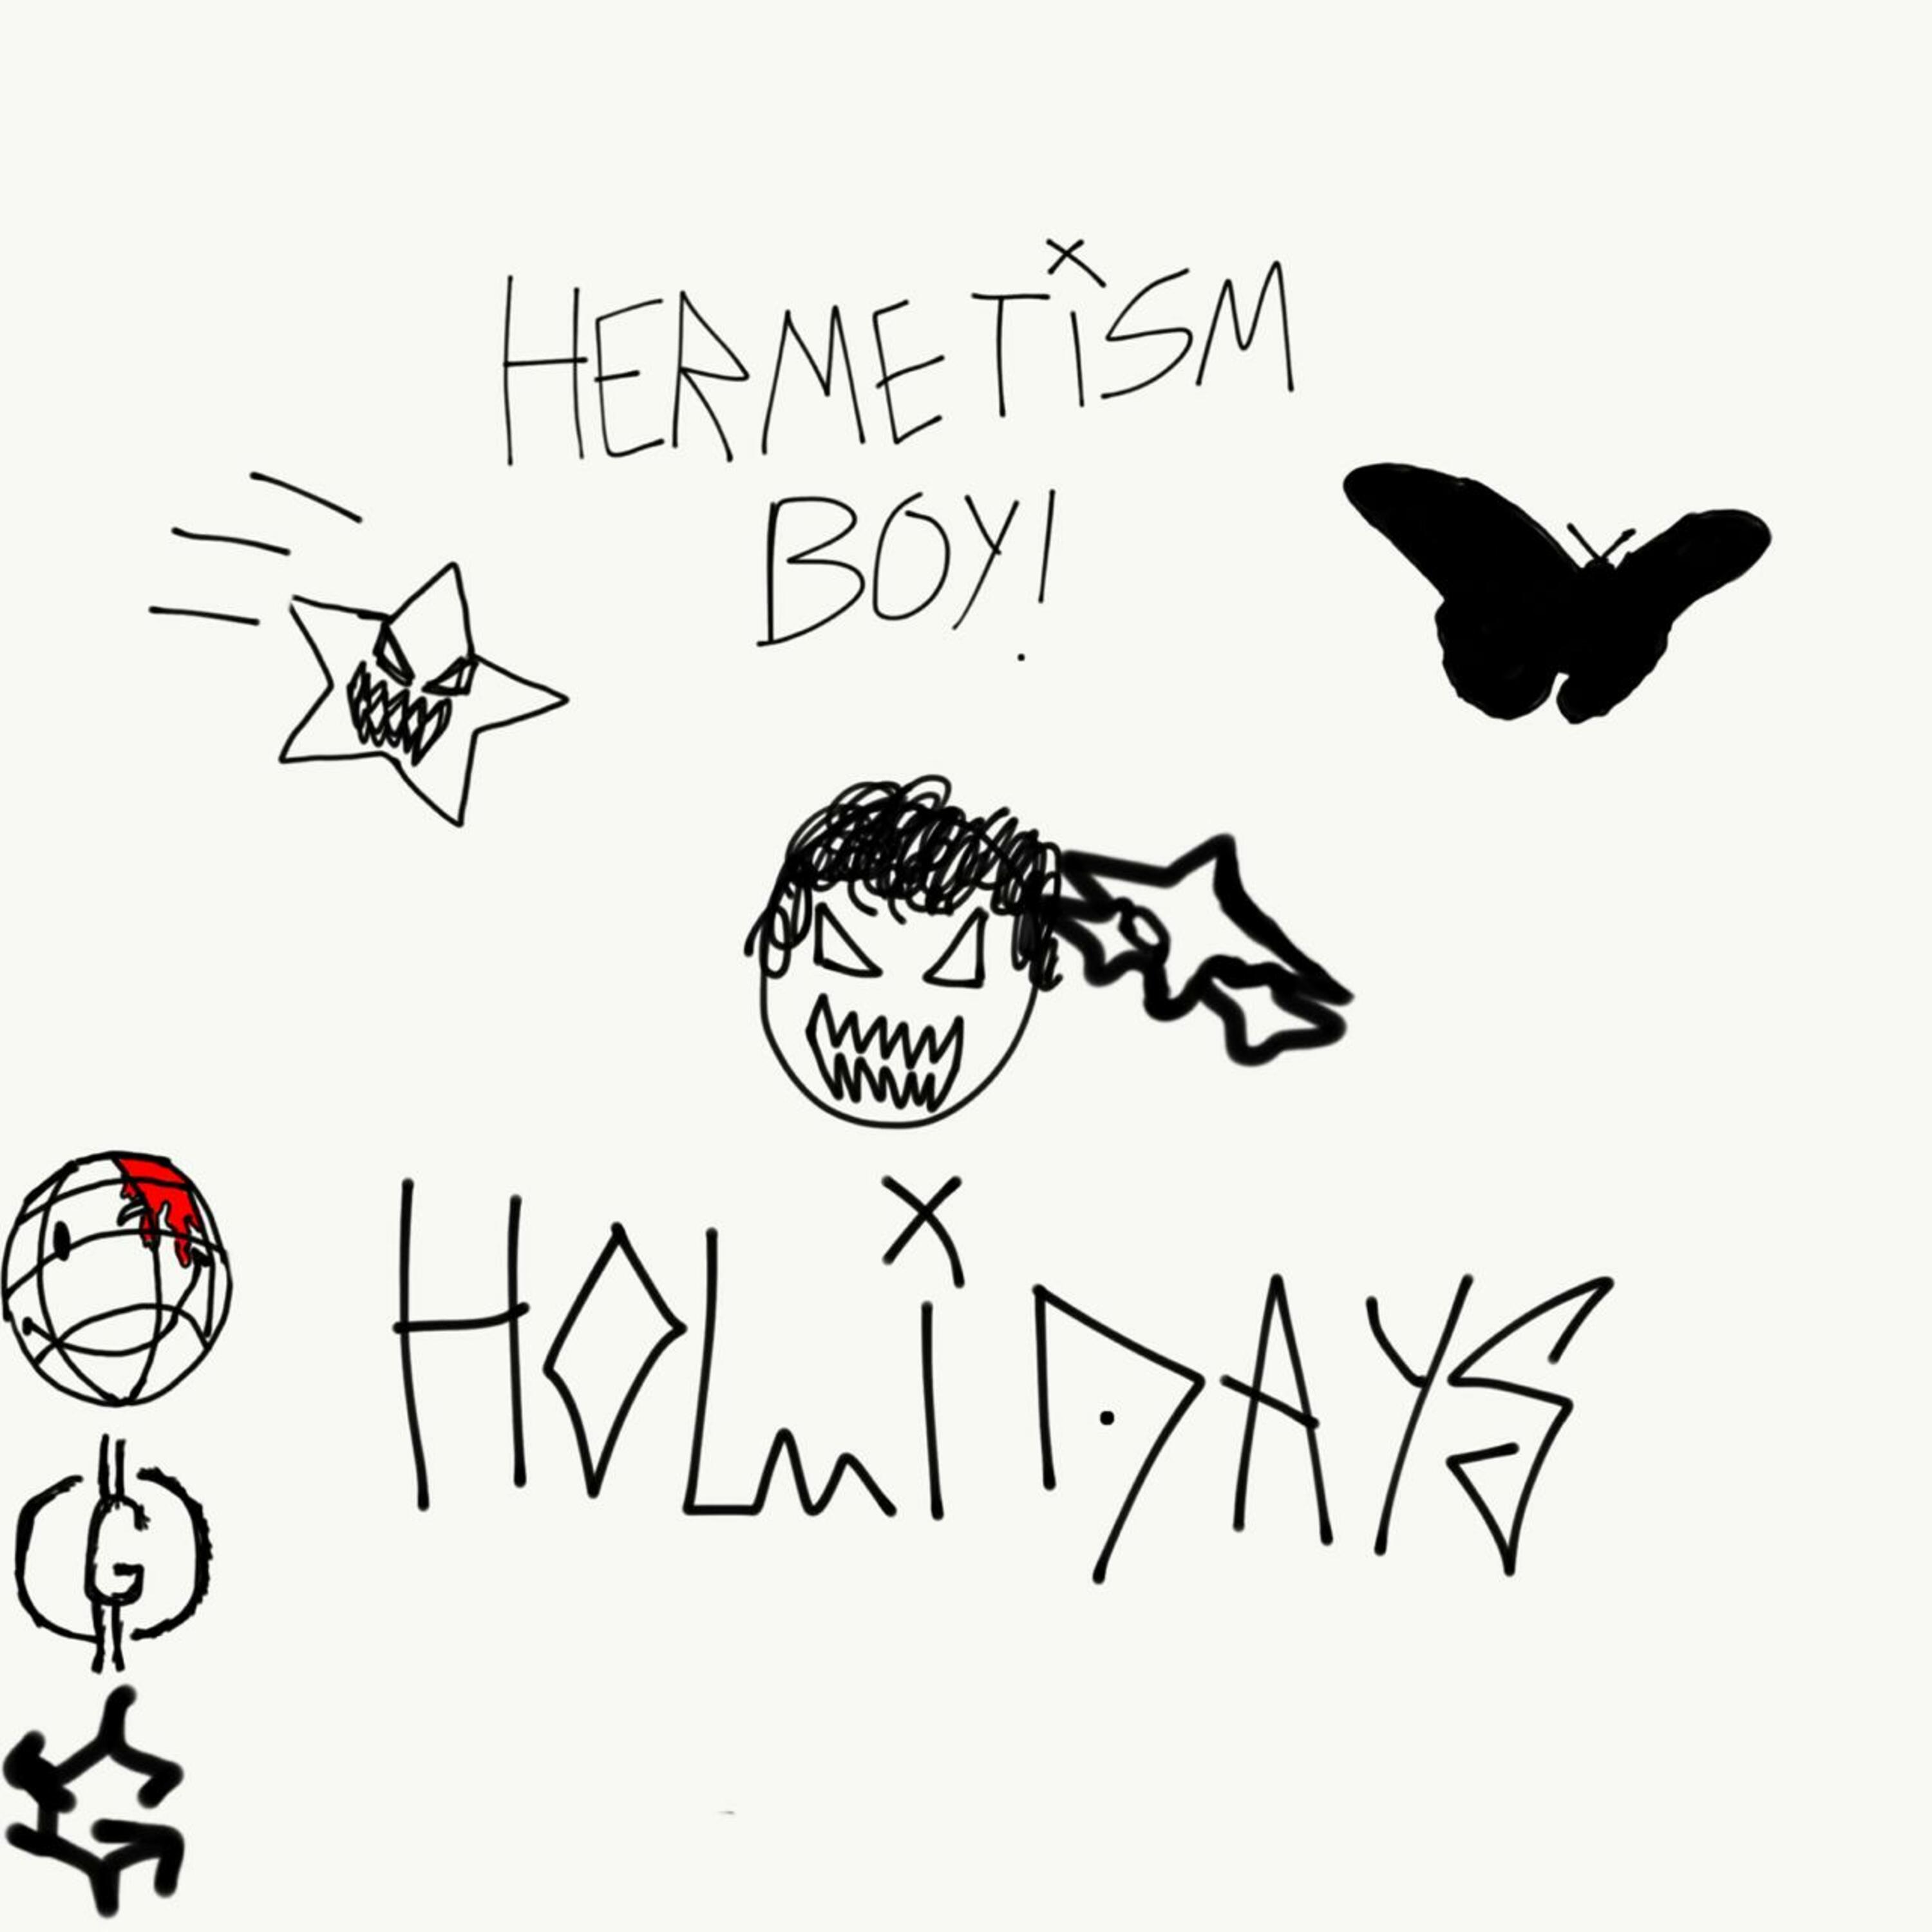 hermetism boy - abbys (feat. mugshotsade, roddie & goff)